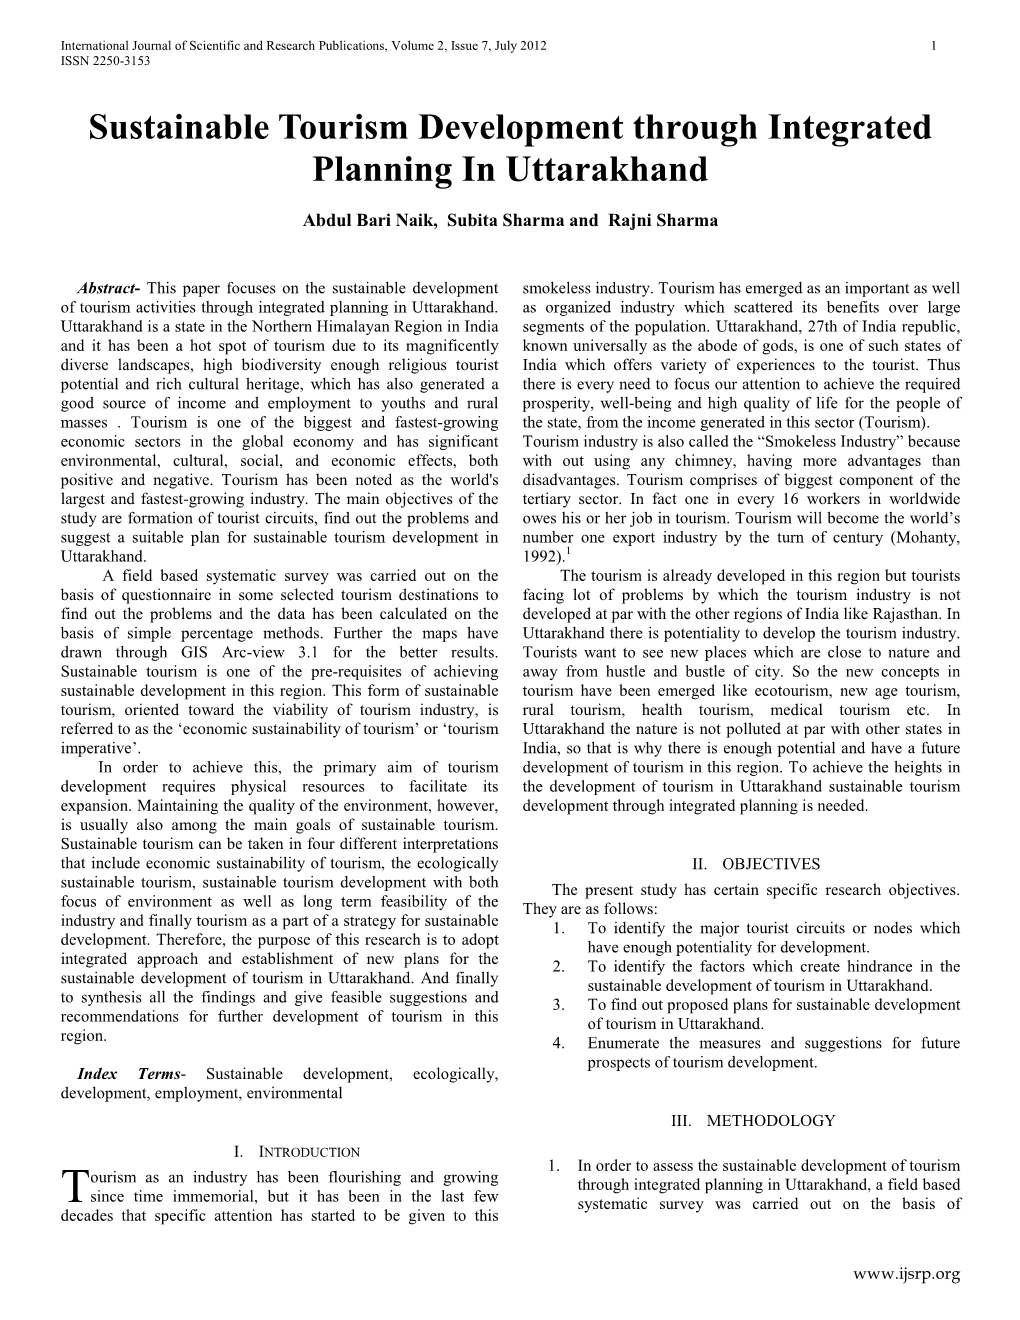 Sustainable Tourism Development Through Integrated Planning in Uttarakhand